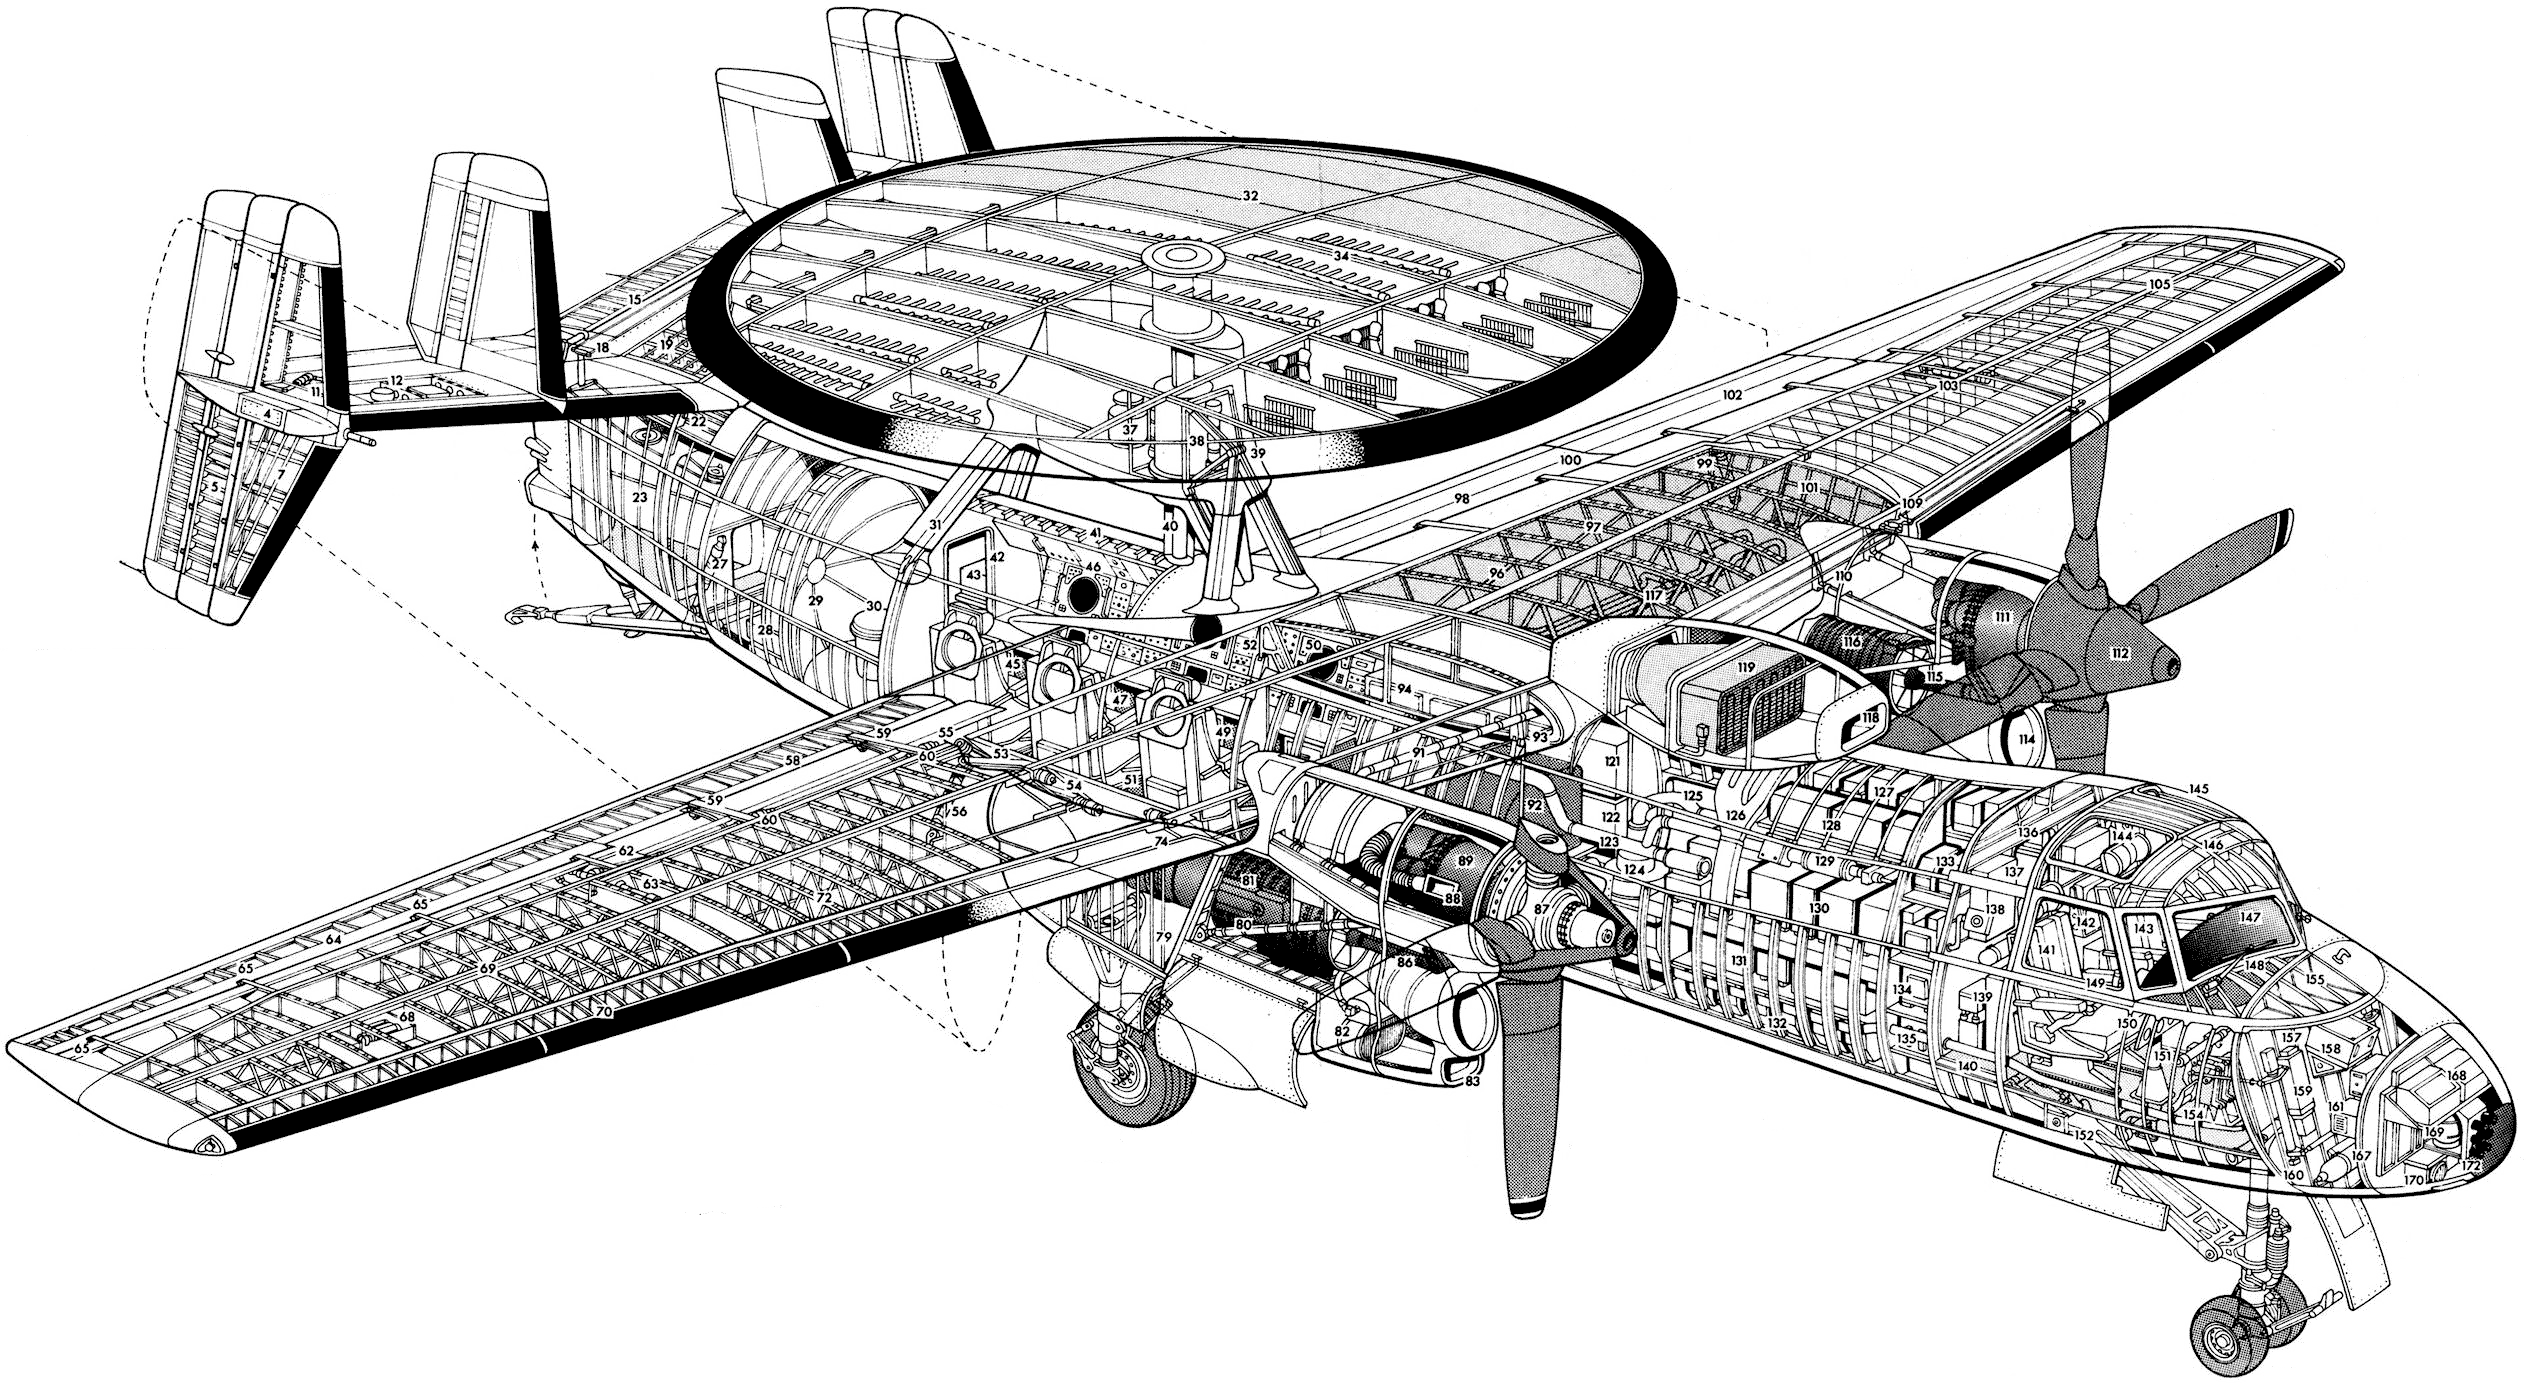 Northrop Grumman E-2 Hawkeye cutaway drawing